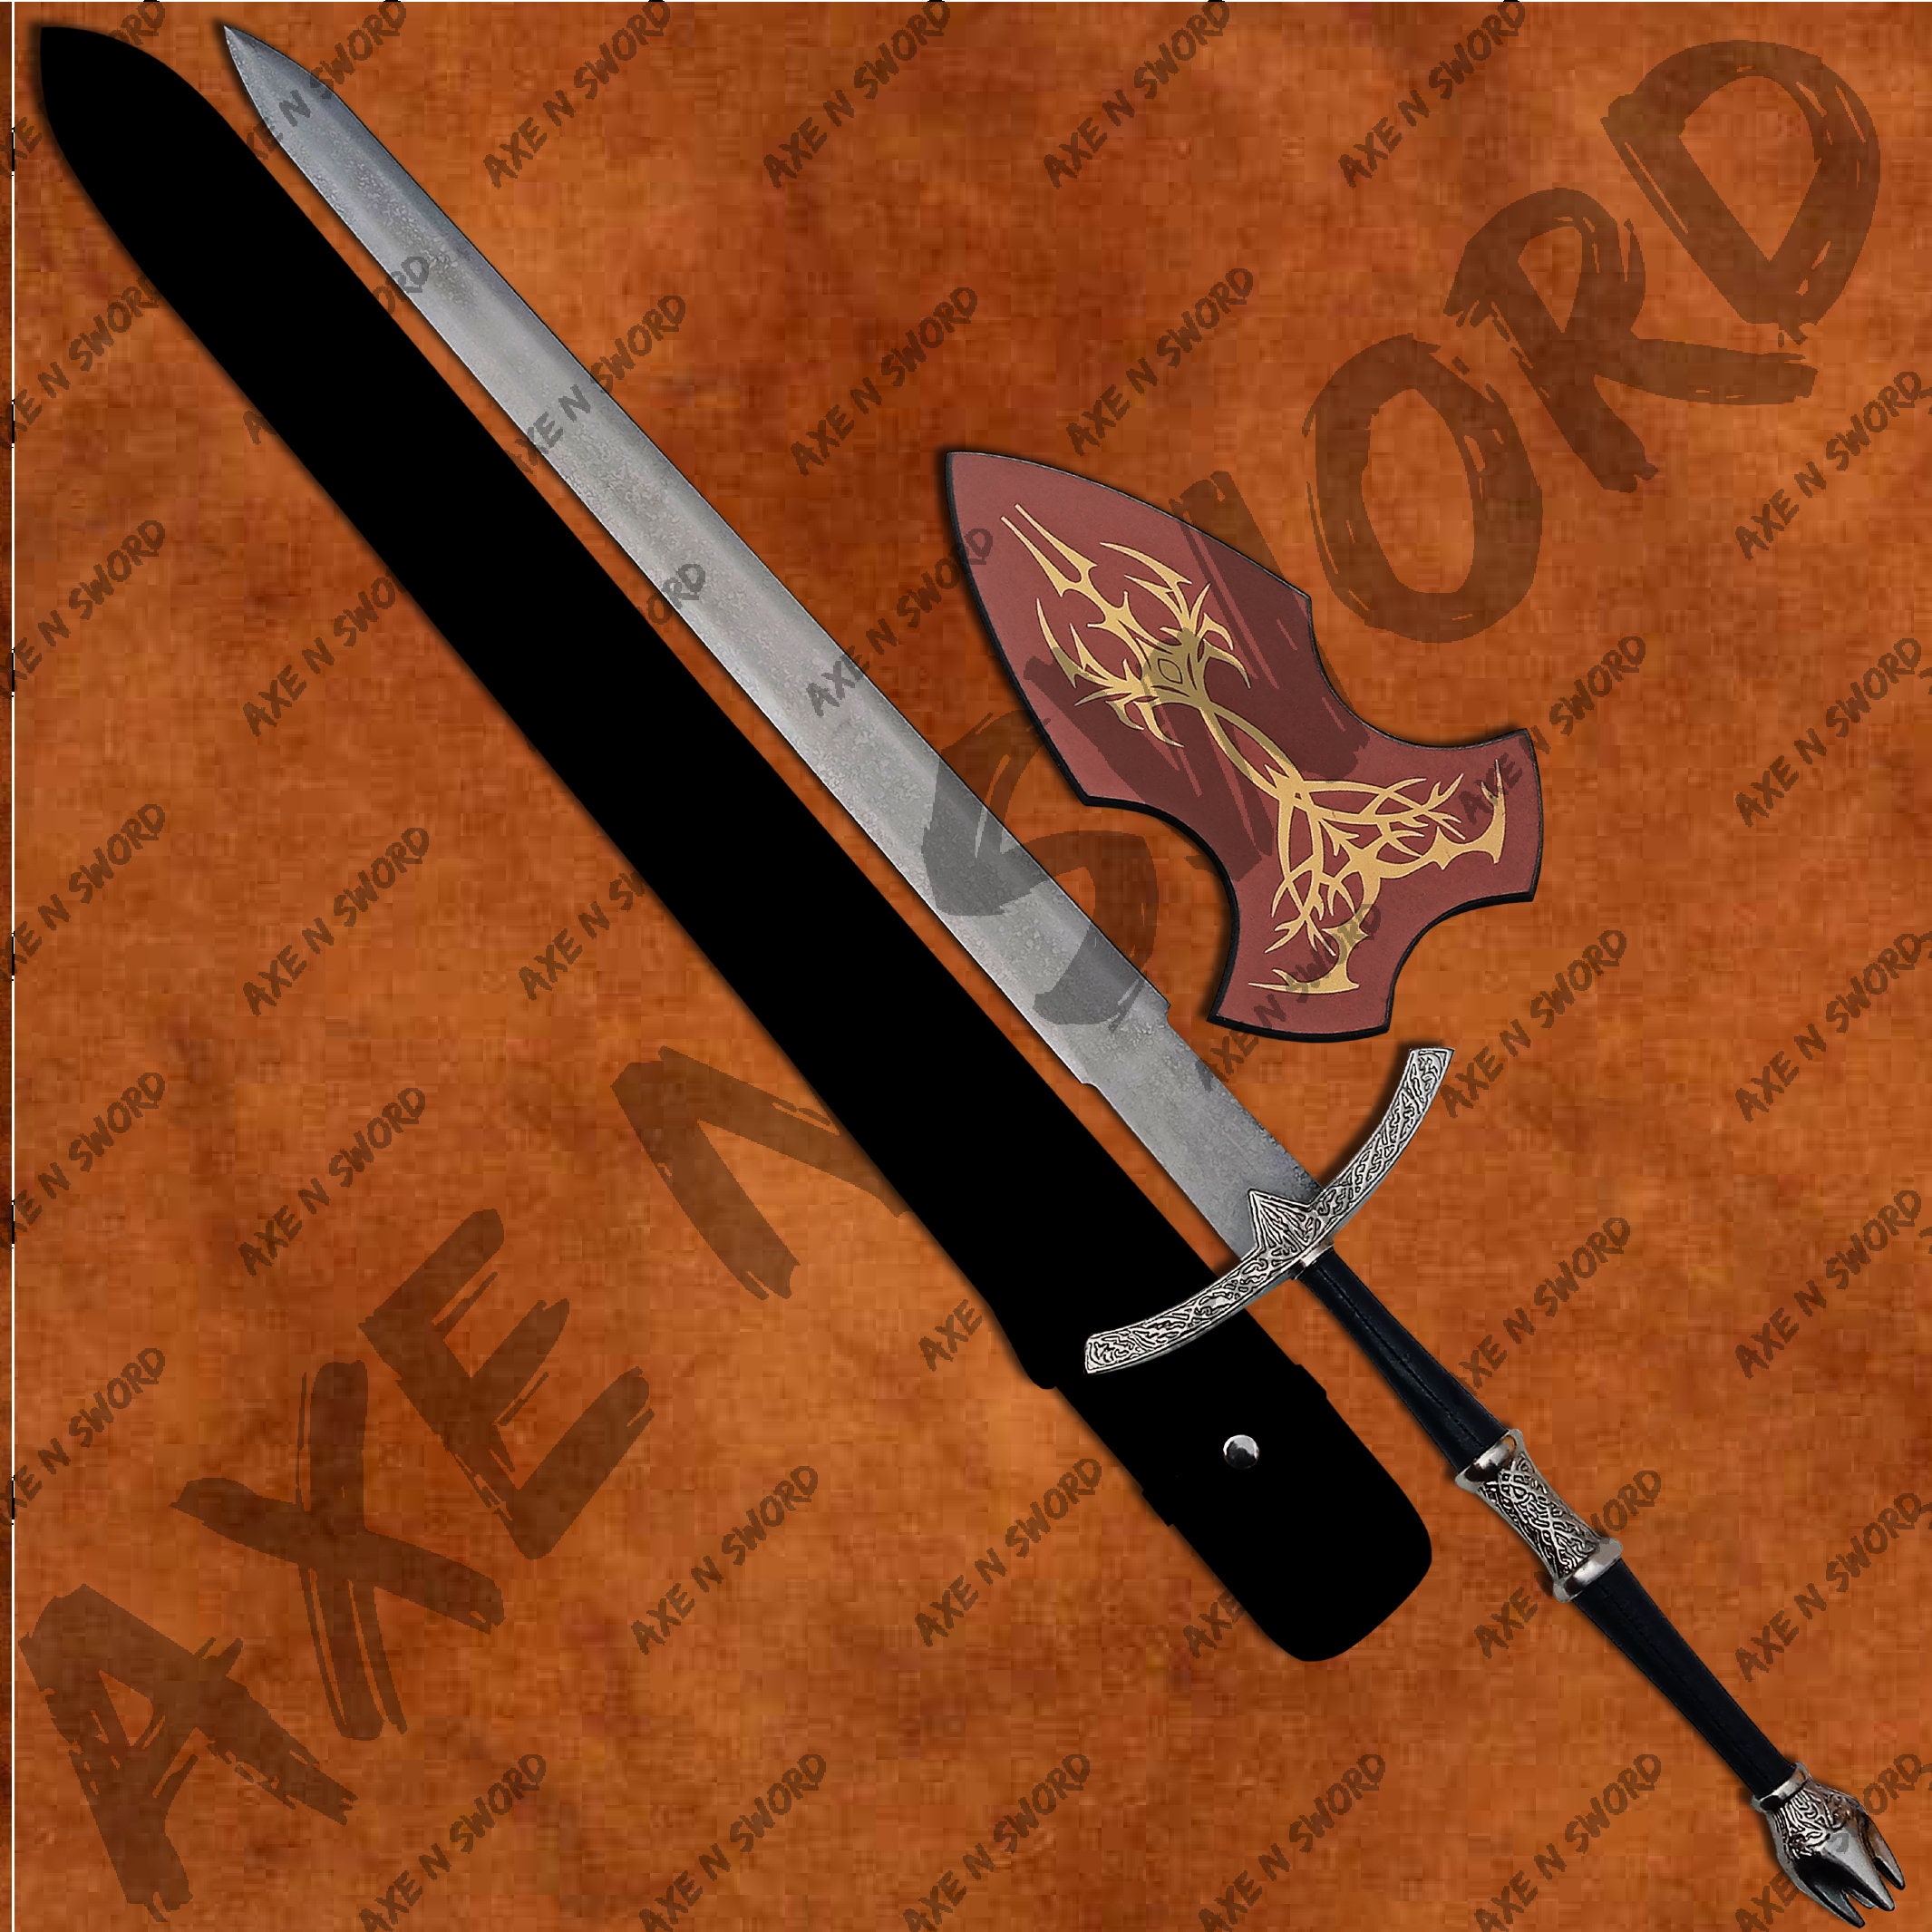 Magic Sword replica from The Black Cauldron : r/SWORDS